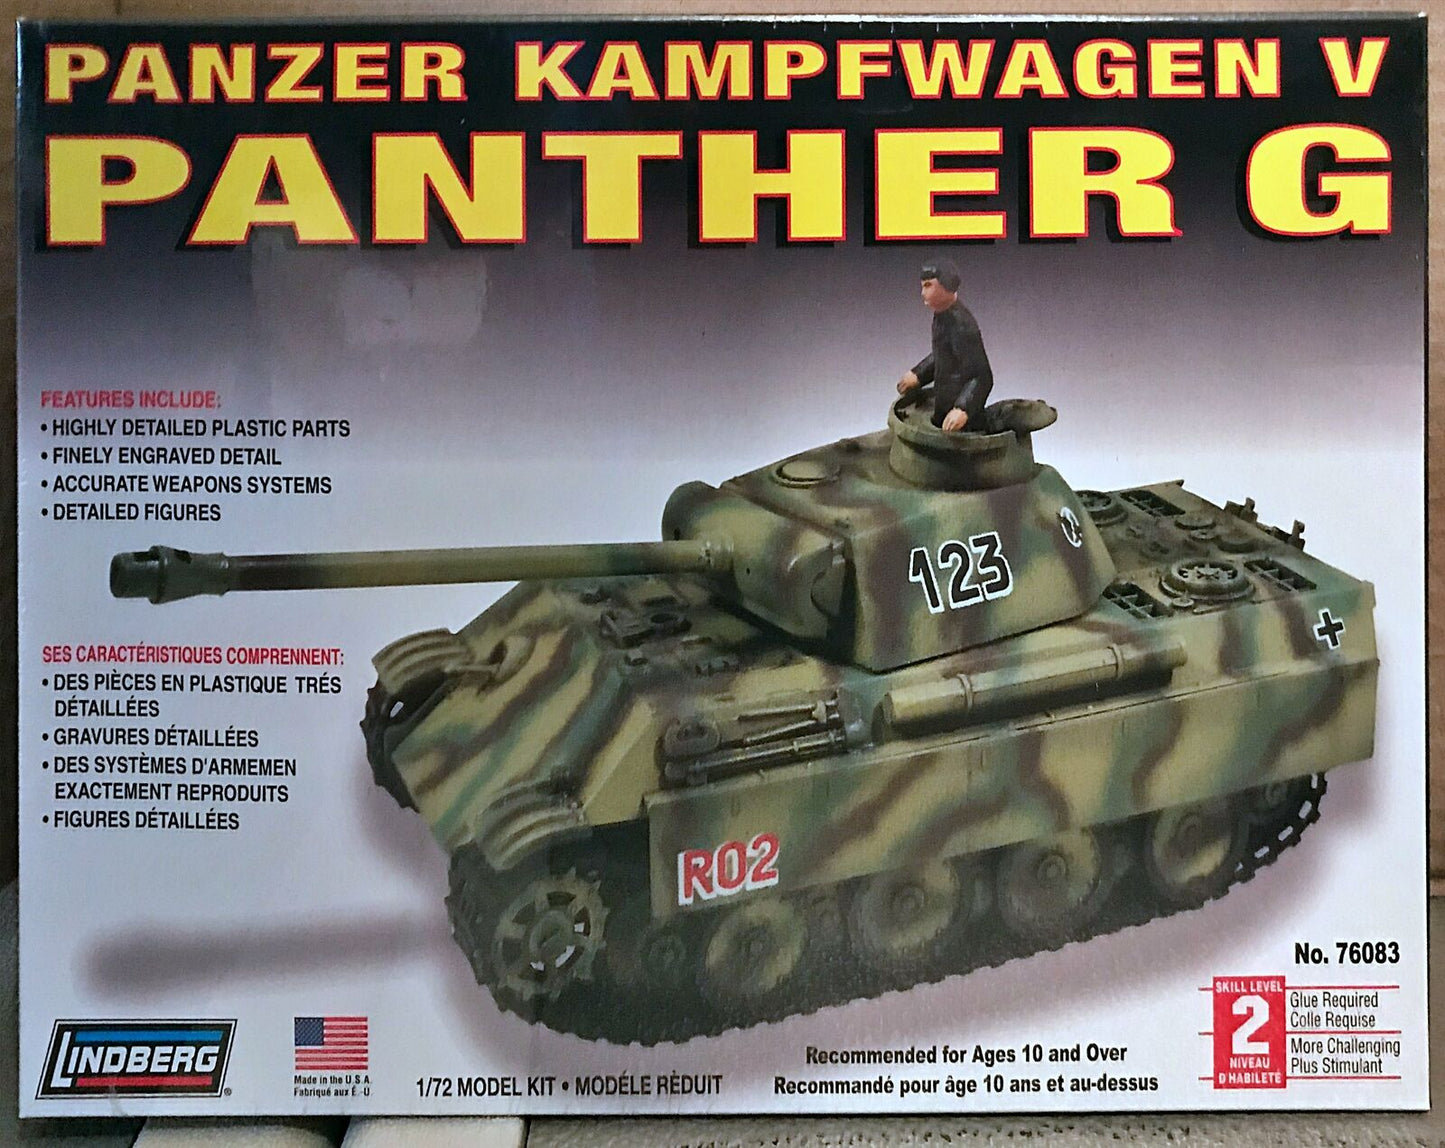  Lindberg German Panther G Tank 1:72 Scale Model Kit